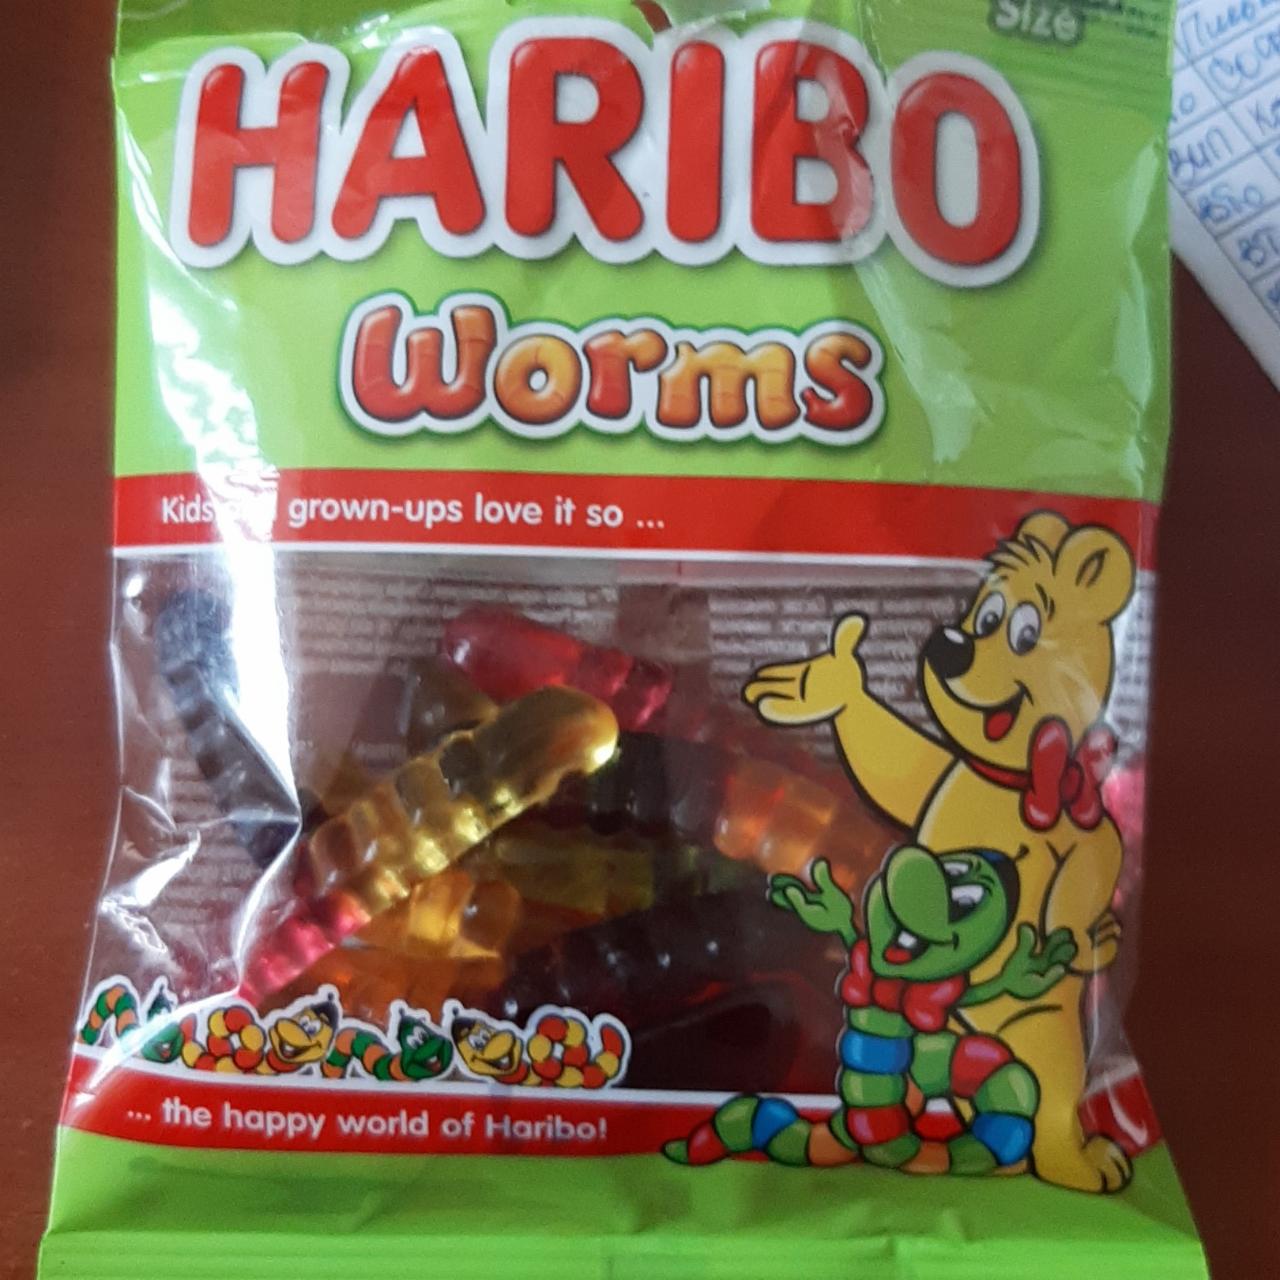 Фото - червячки Haruno worms Haribo